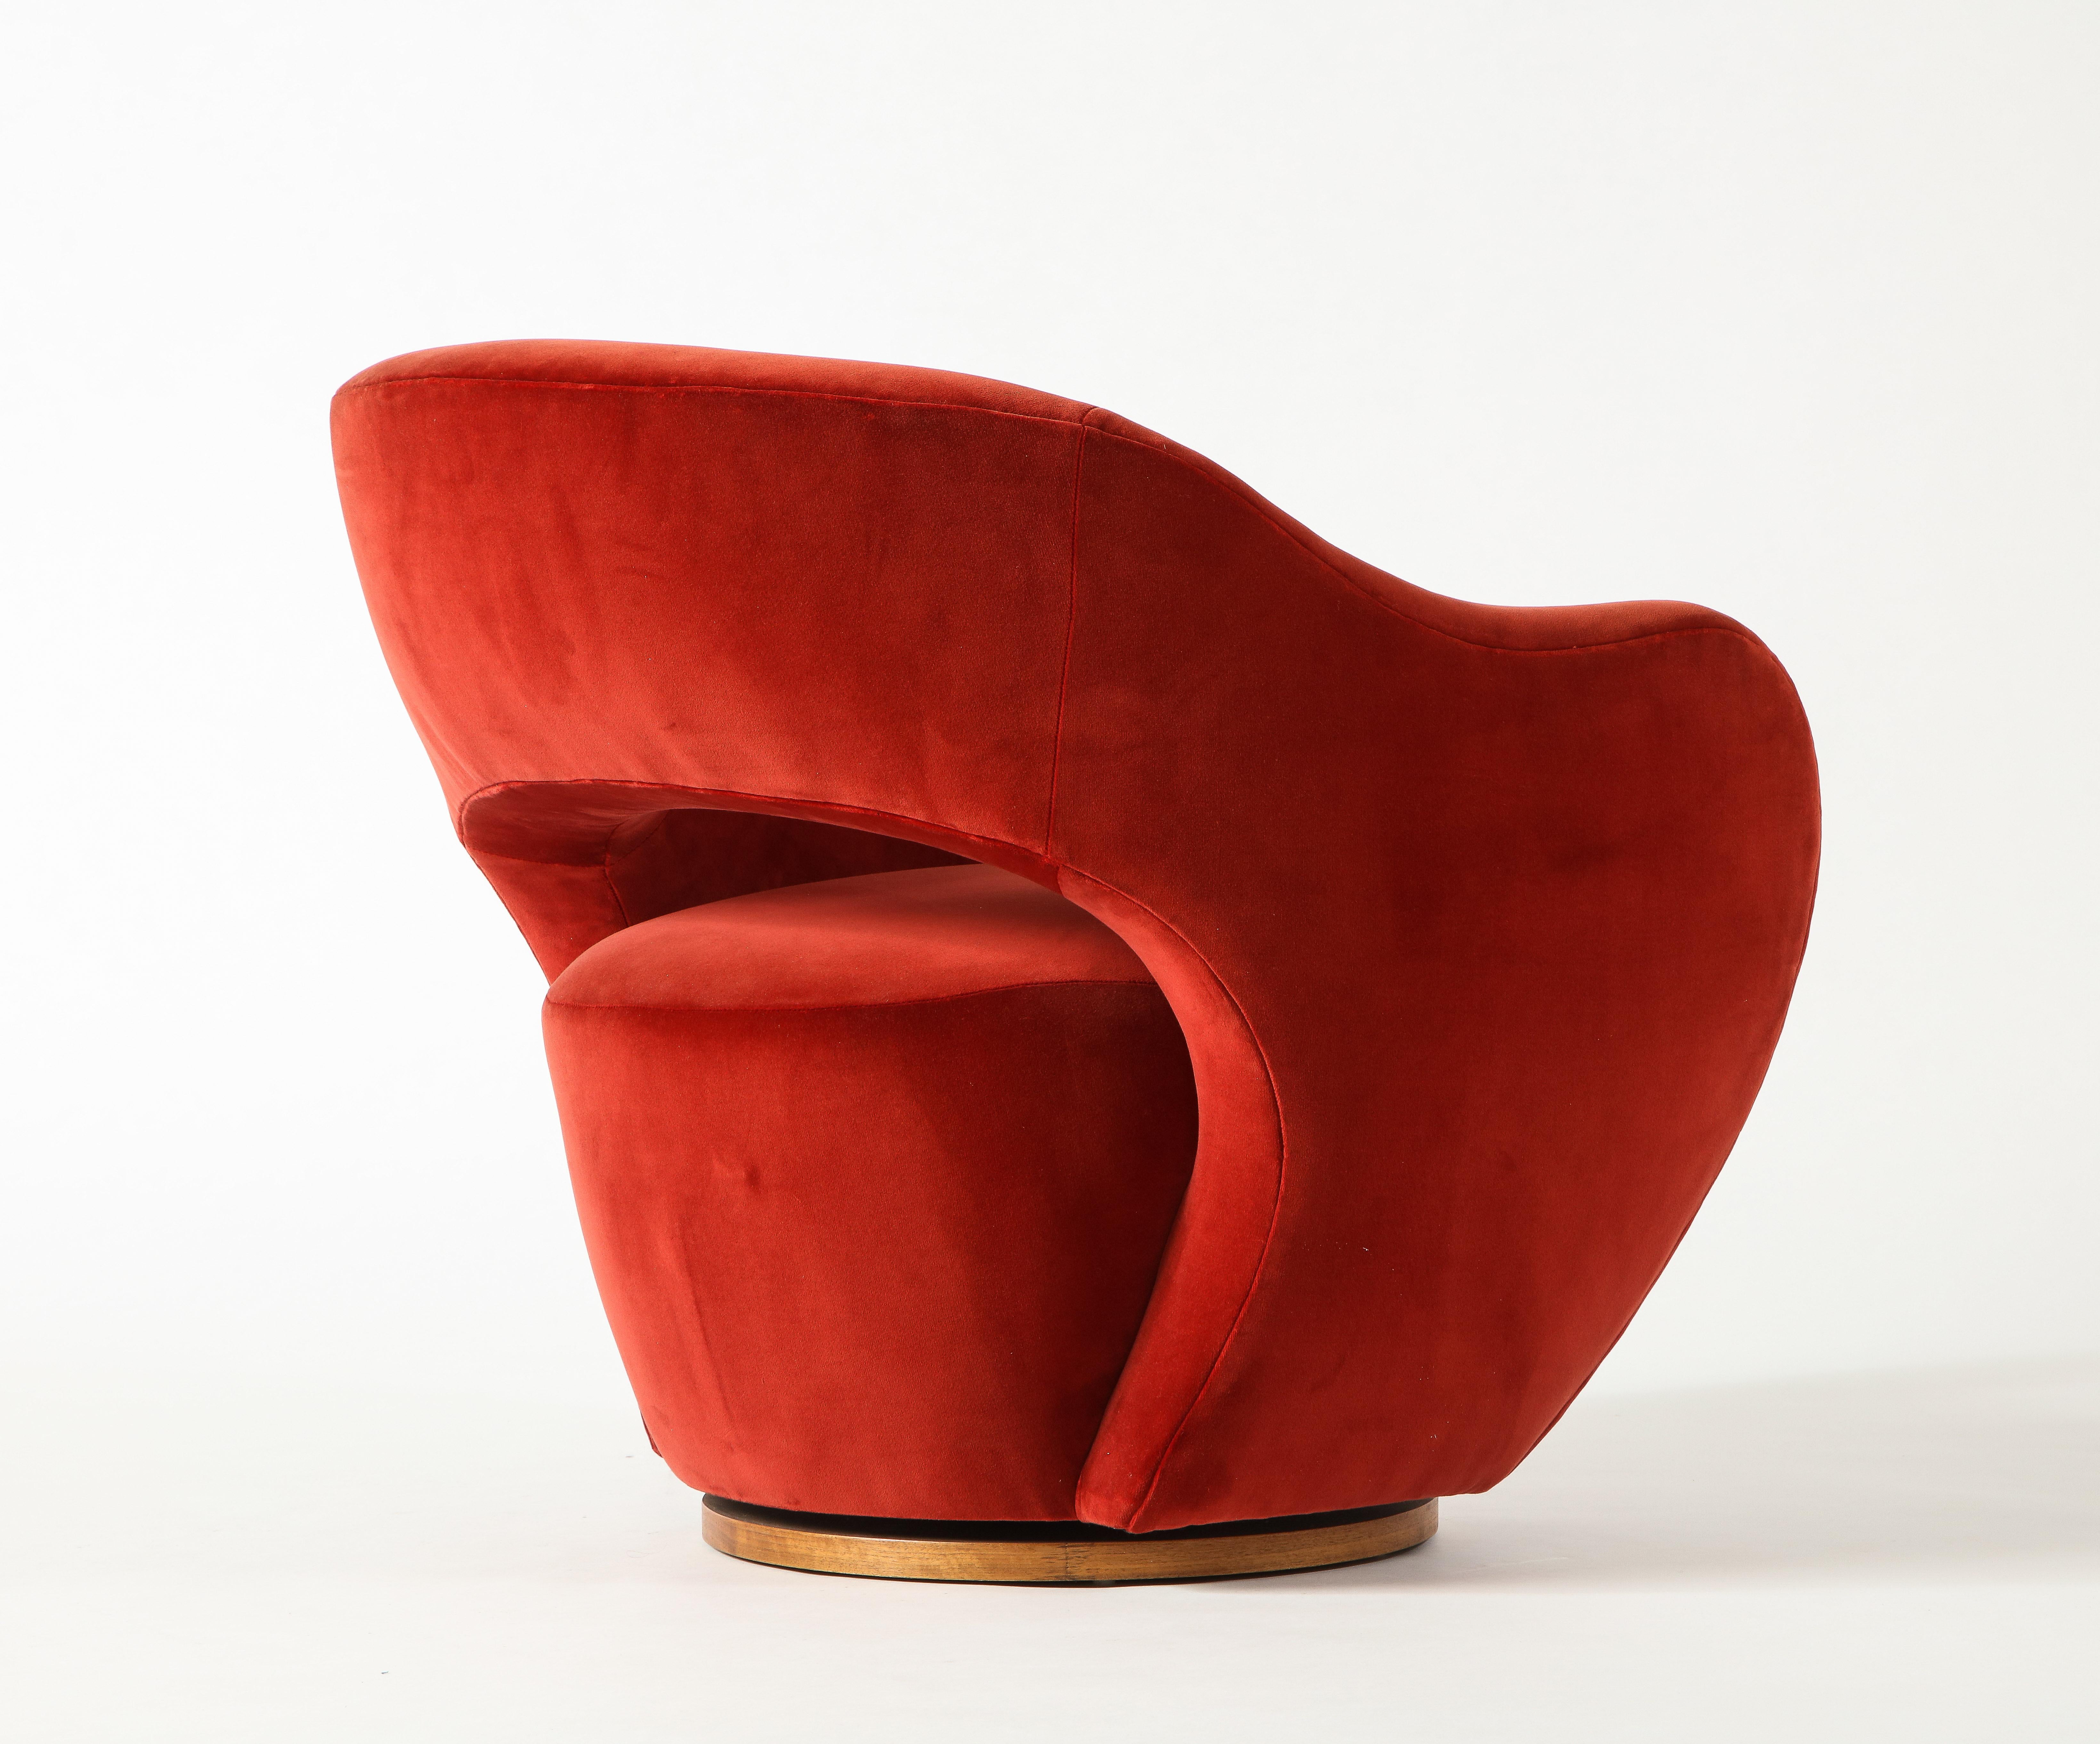 Modern Vladimir Kagan Wysiwyg Chair with Red Upholstery & Natural Walnut Swivel Base